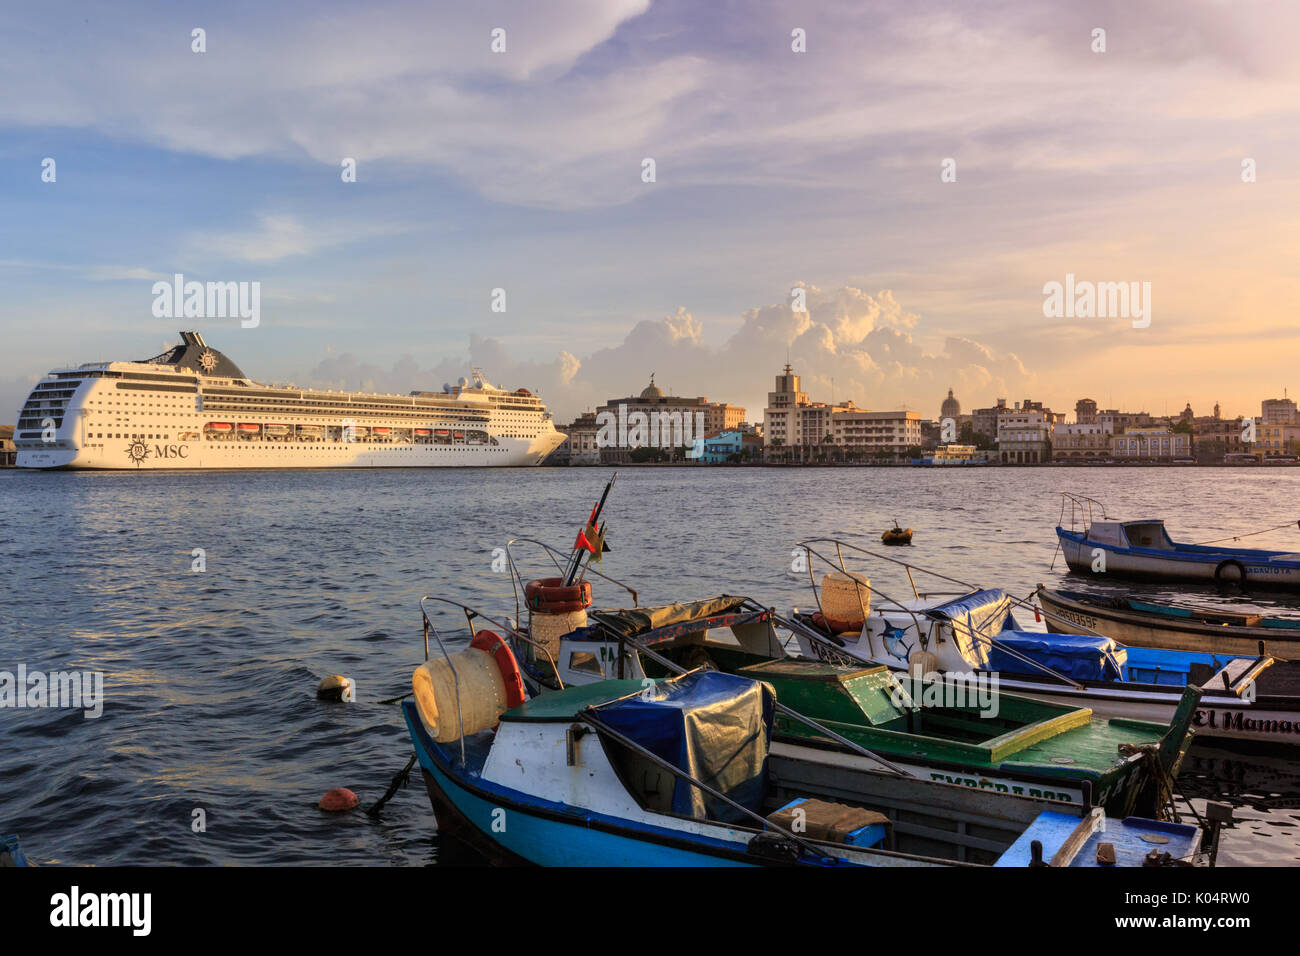 Cruise Ship MSC Opera at sunset in the Port of Havana cruise terminal, Havana, Cuba Stock Photo